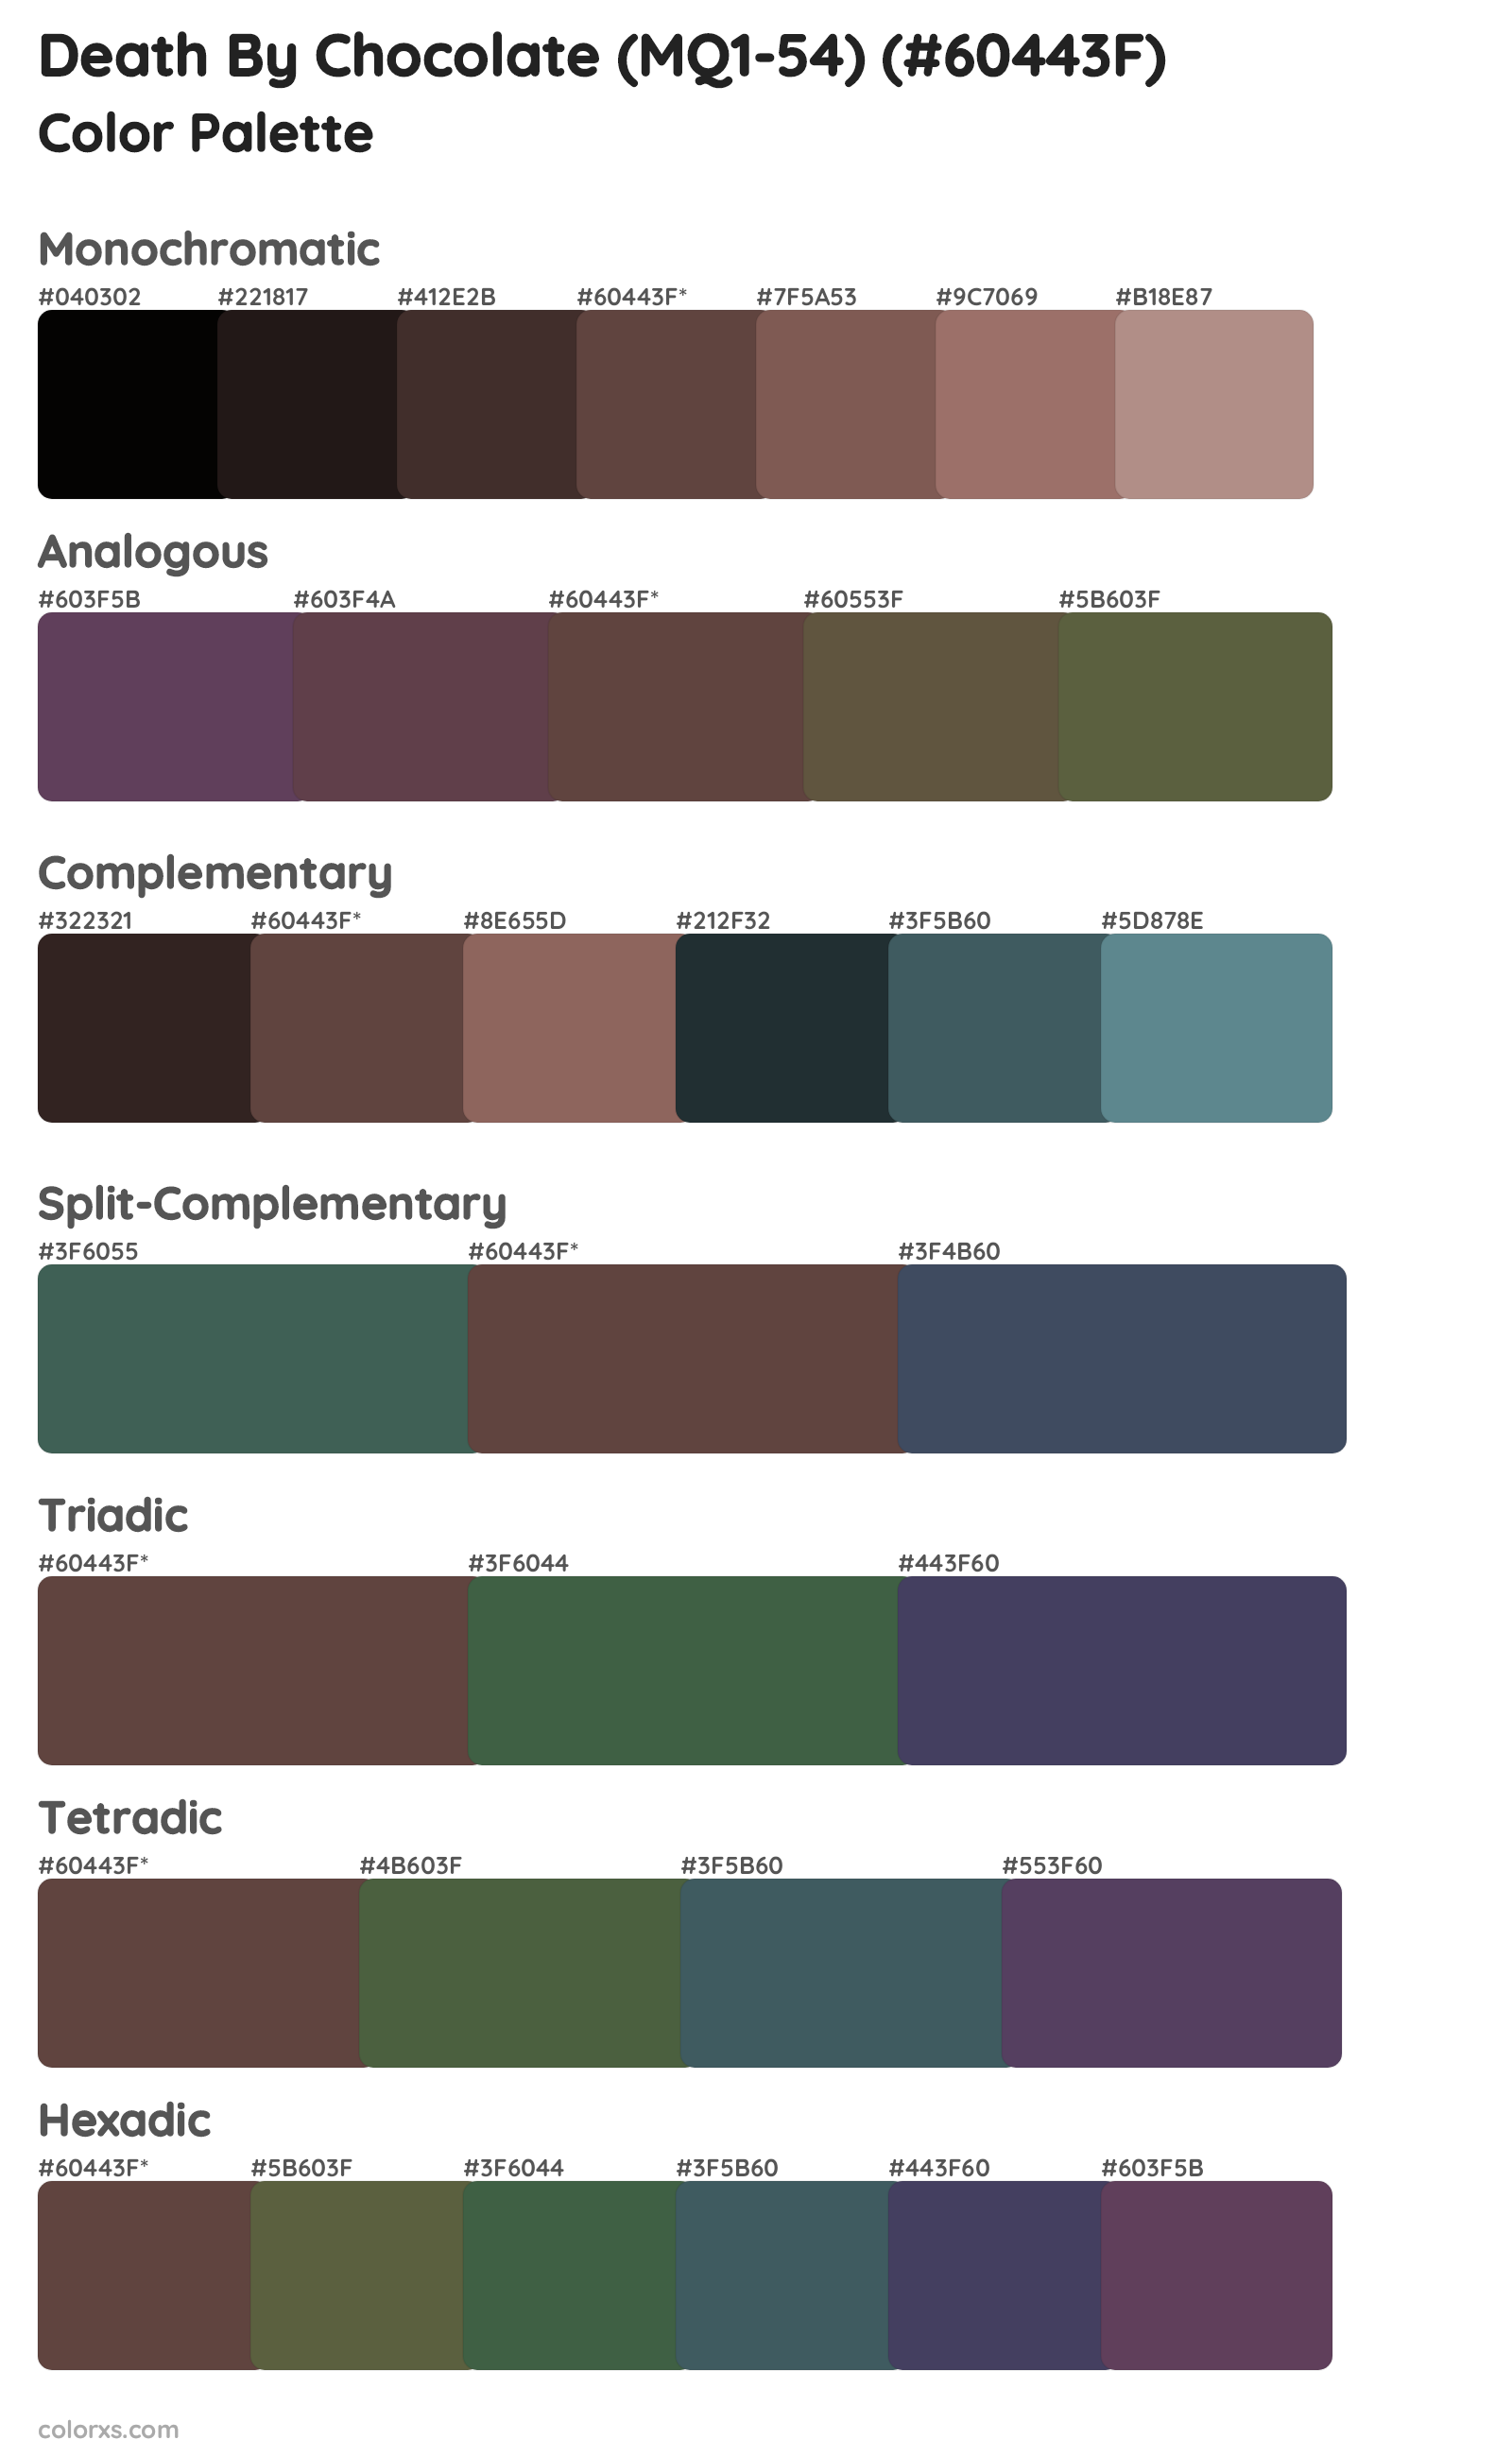 Death By Chocolate (MQ1-54) Color Scheme Palettes